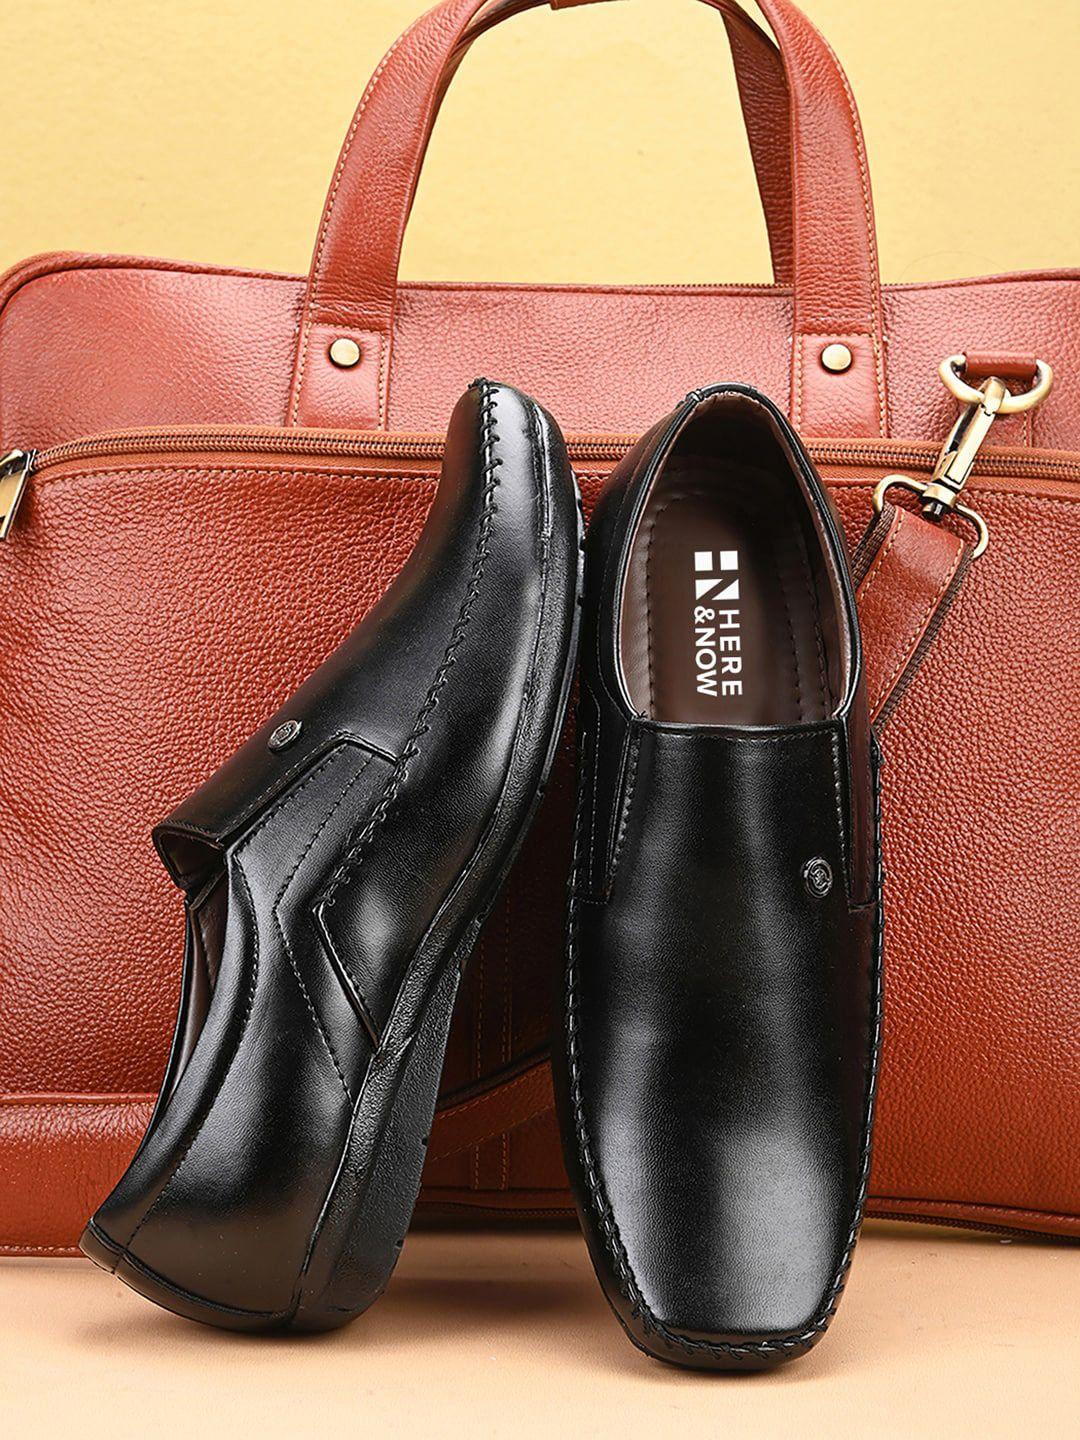 here&now men formal slip-on shoes